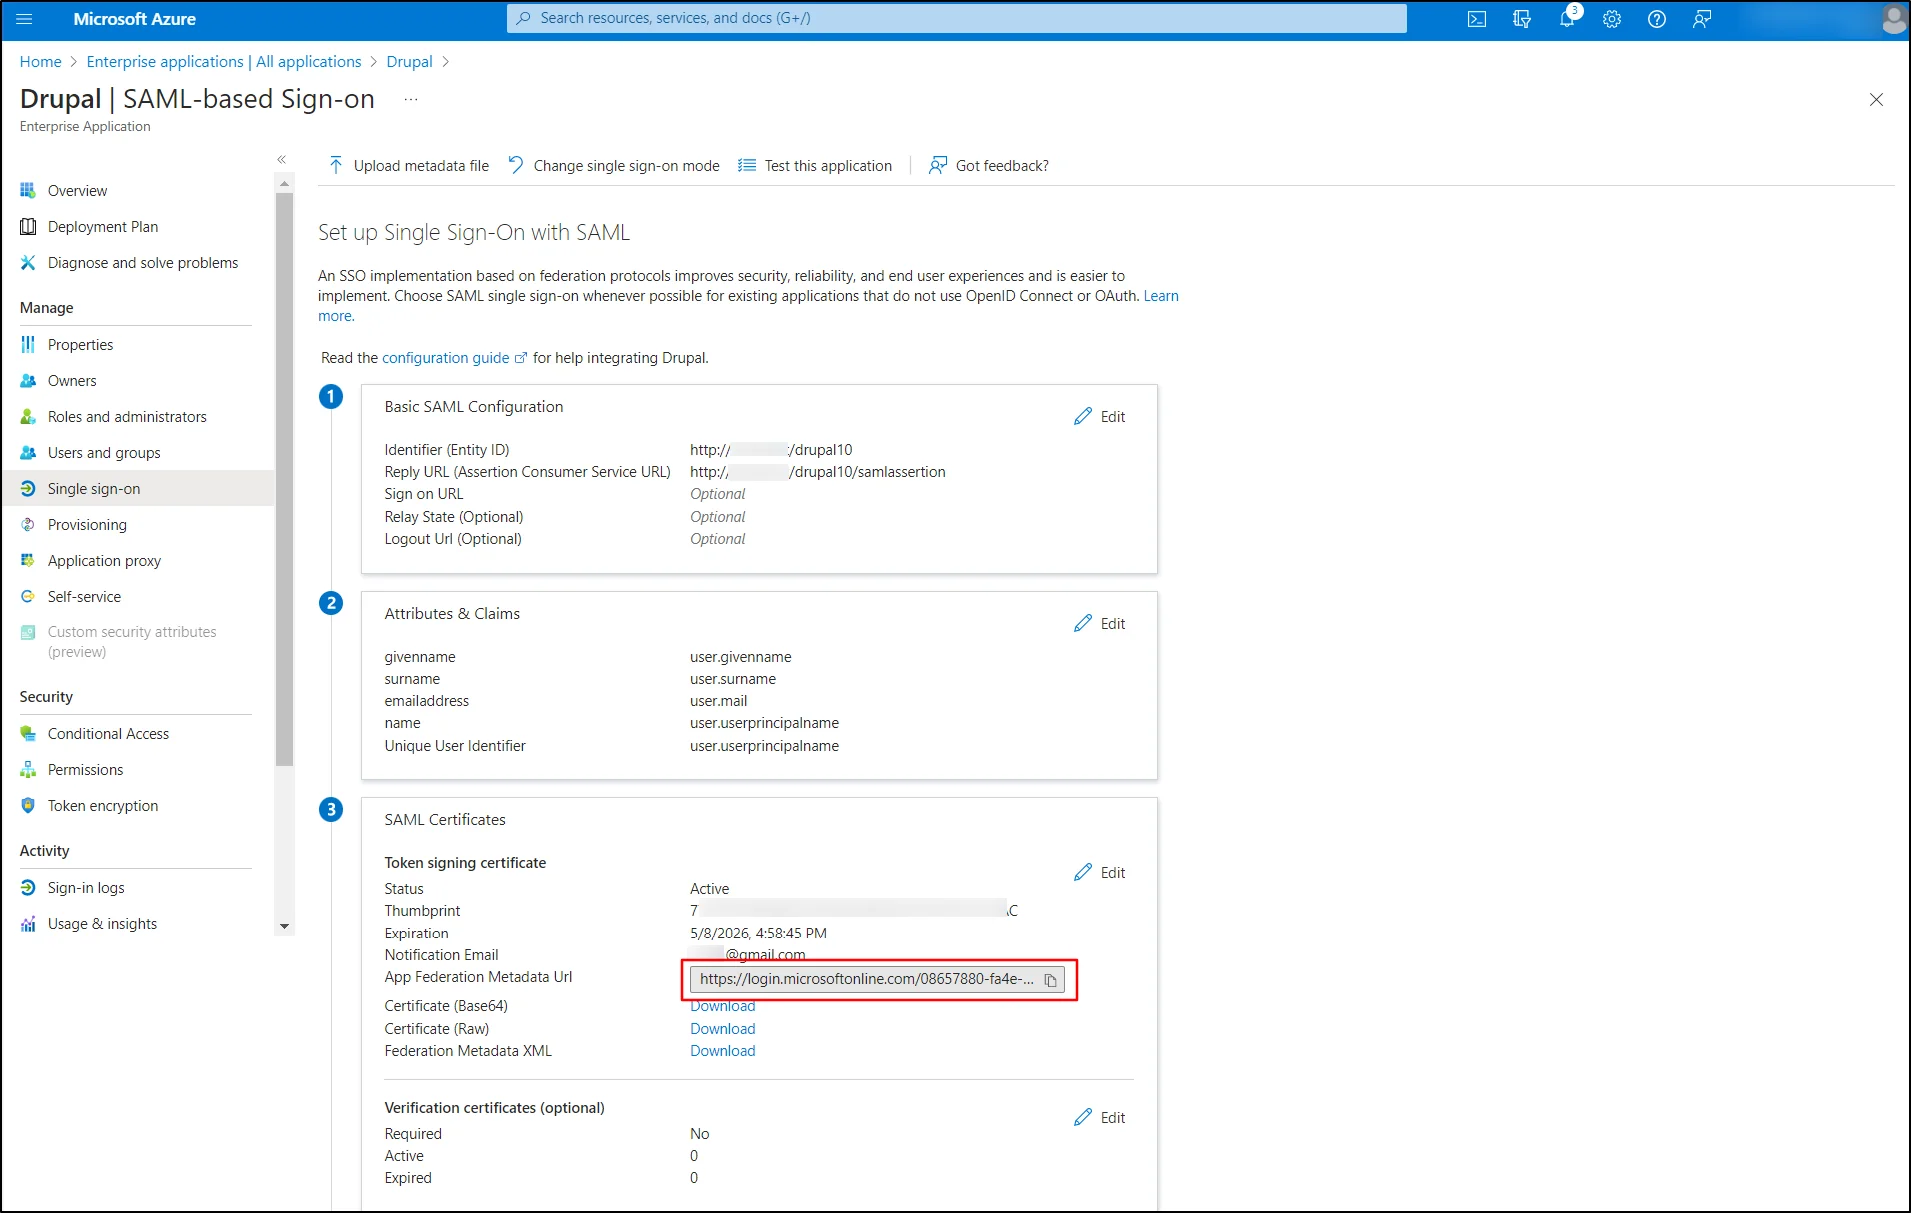 Microsoft-Azure-SAML-Certificate-card-and-copy-federation-metadata